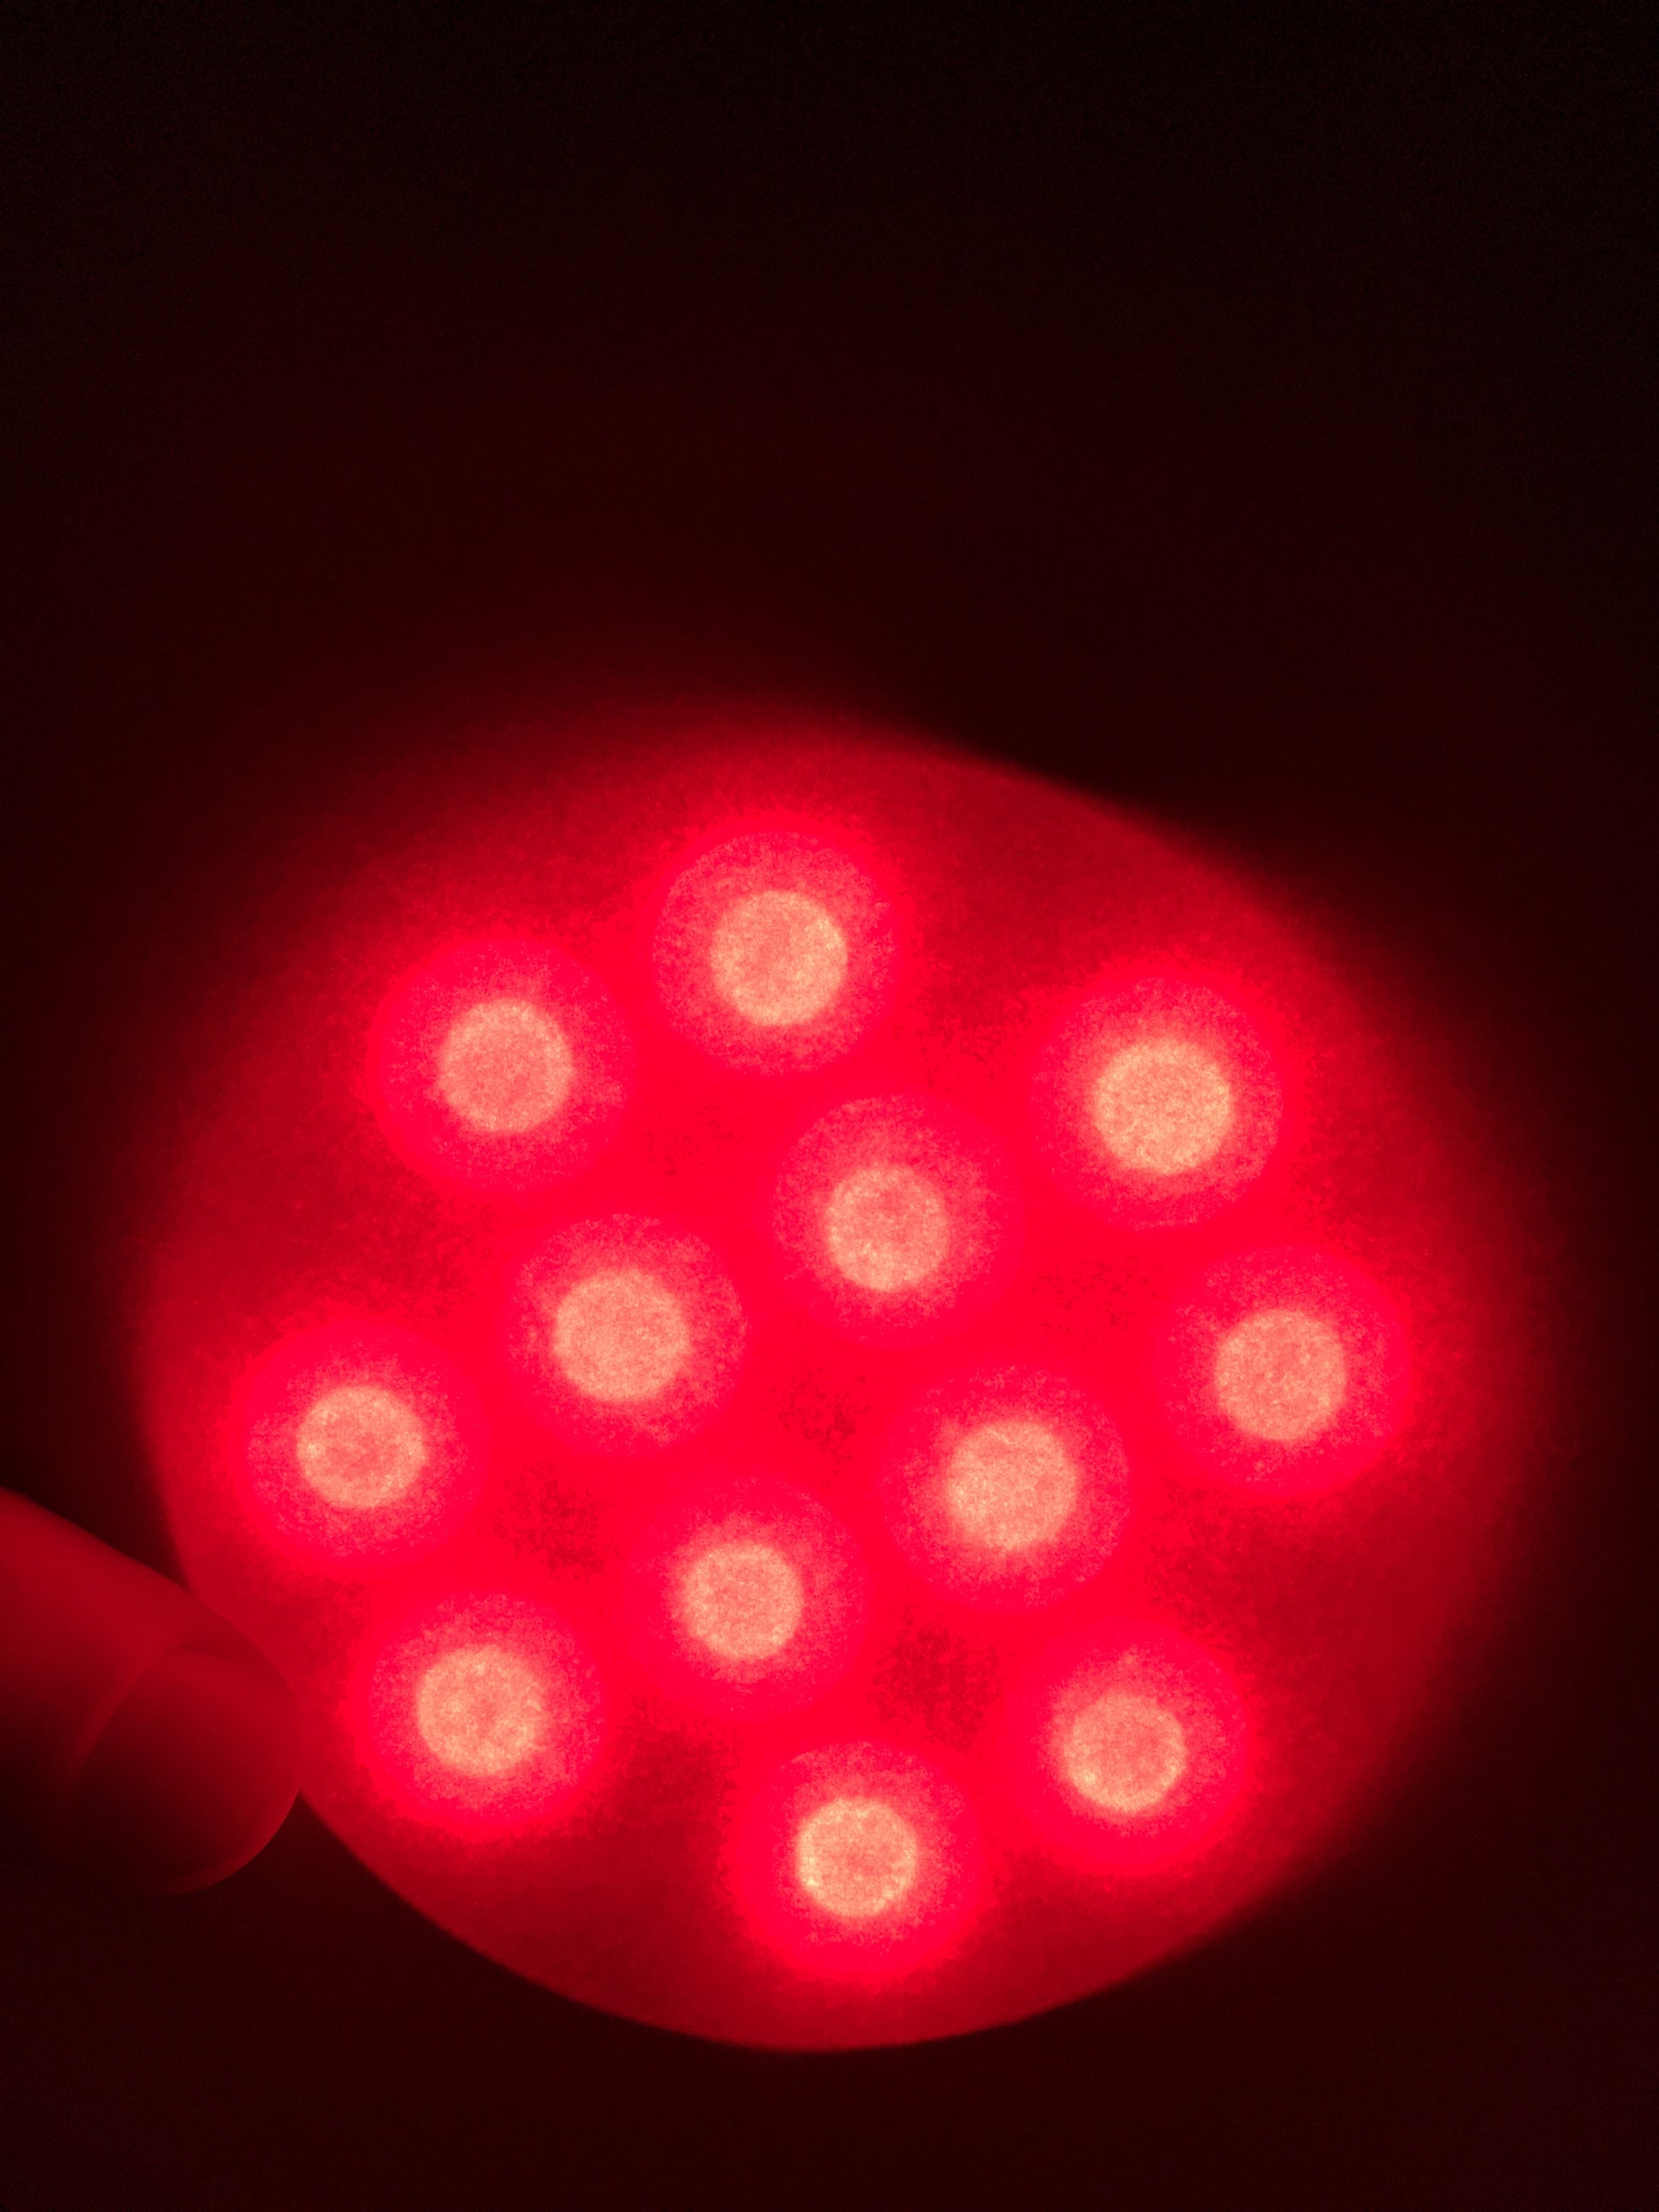 OptiBio "Micro" Handheld Red/NIR lamp - Home Light Therapy